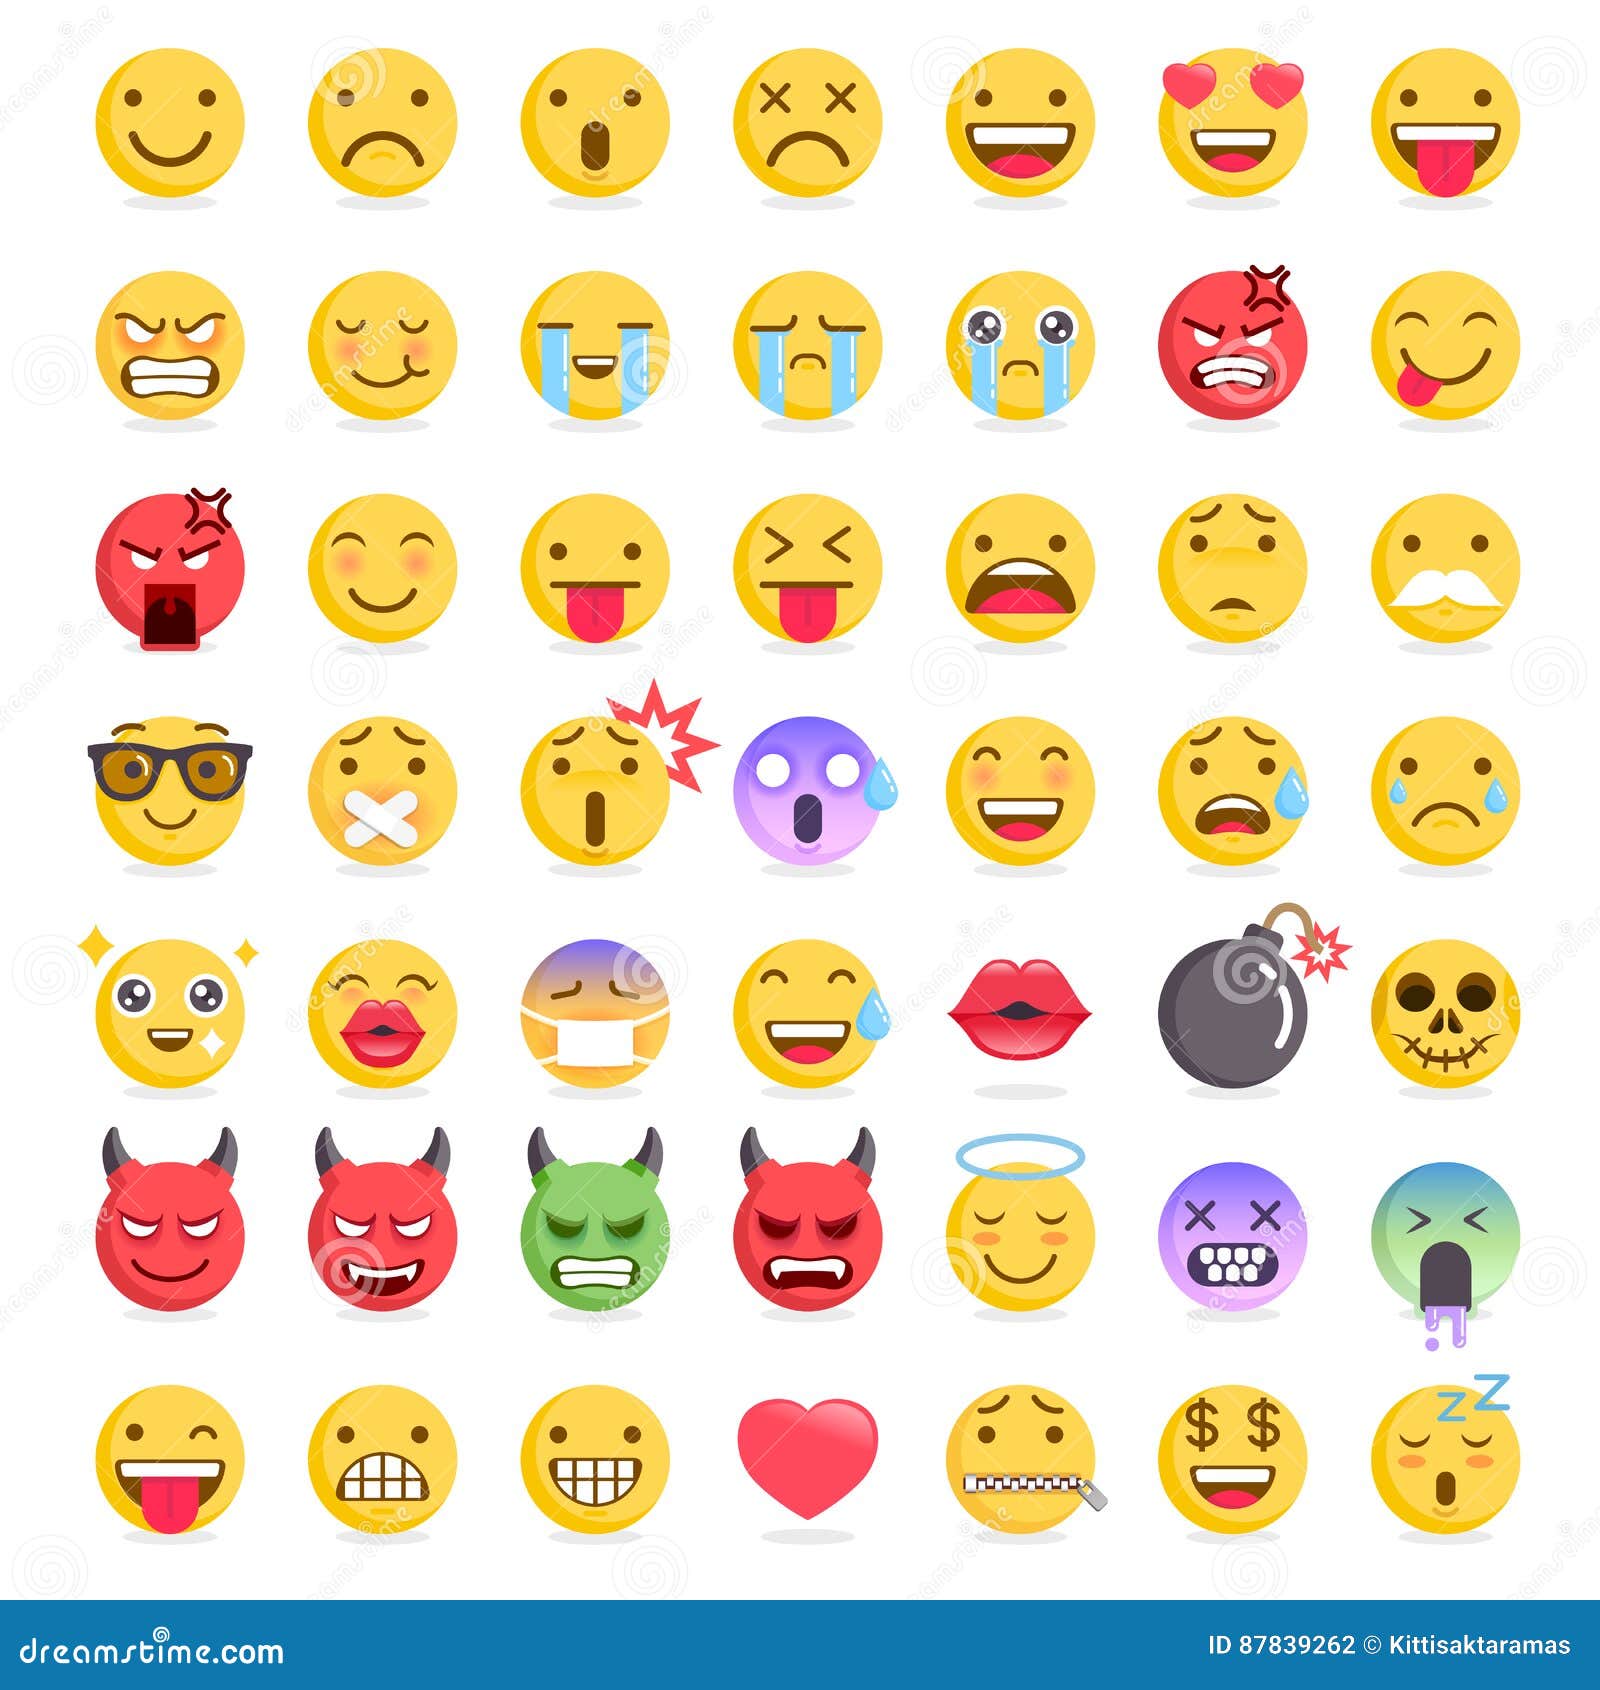 emoji emoticons s icons set.